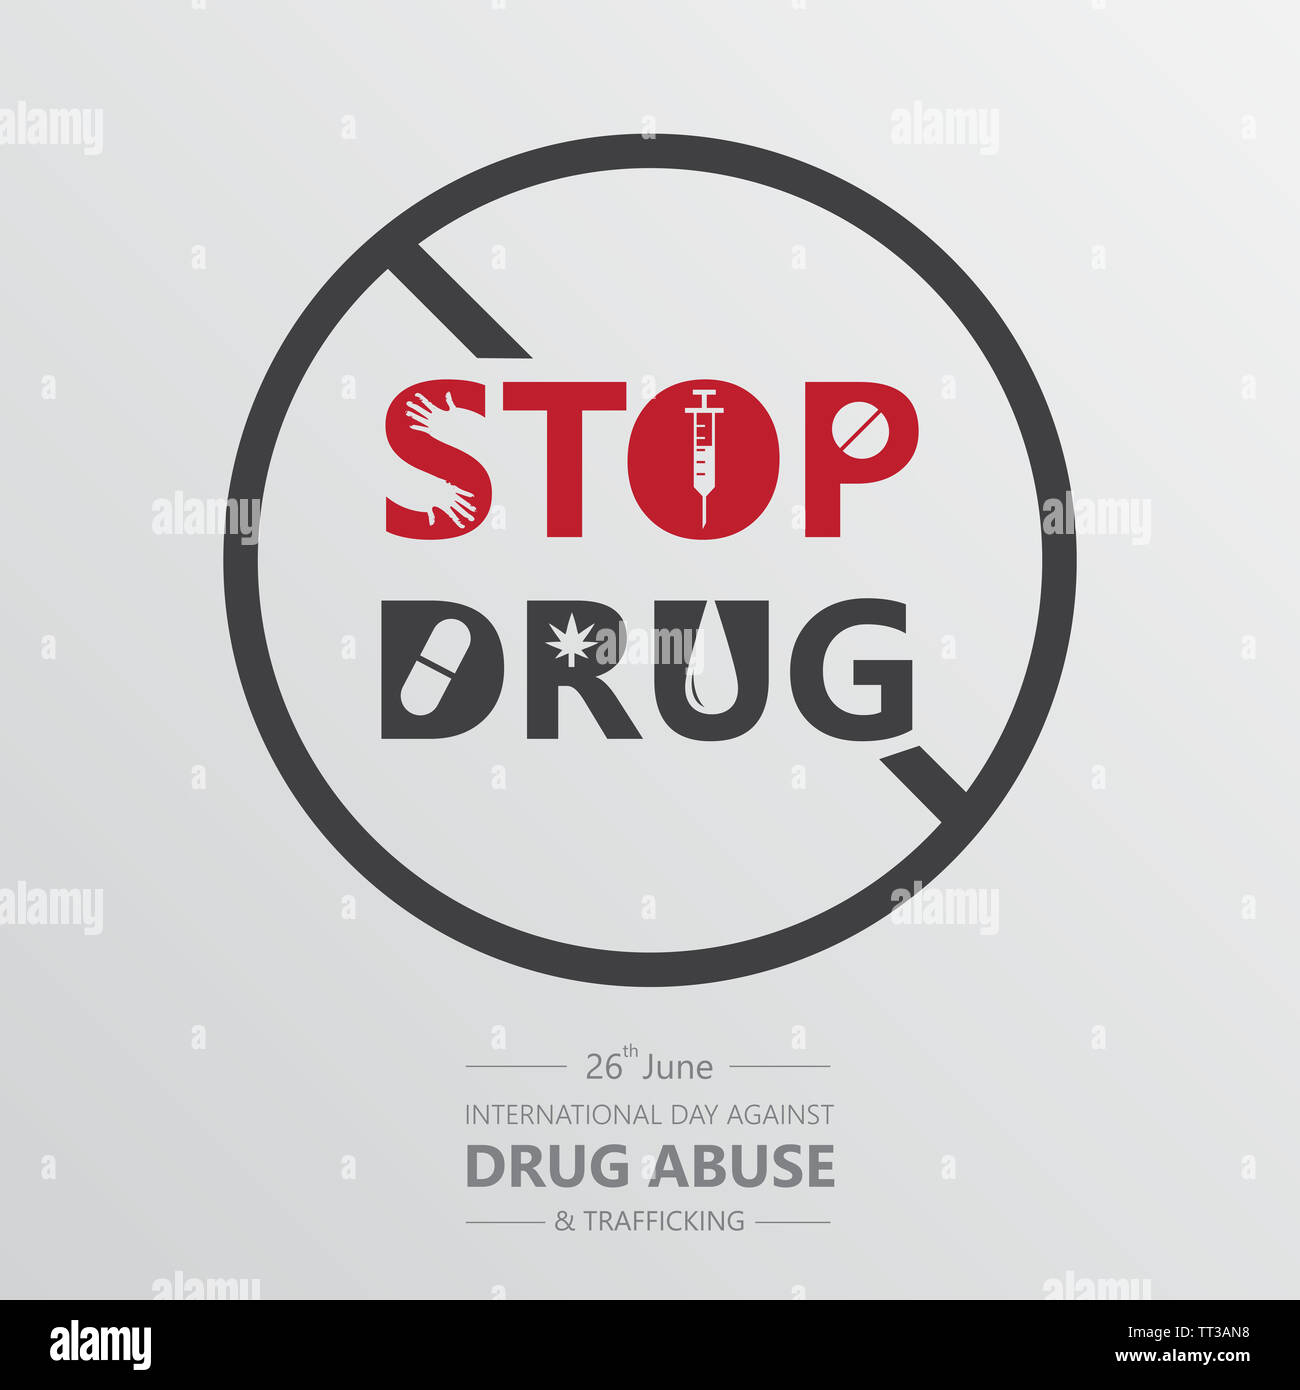 international day against drug abuse banner vector Stock Photo